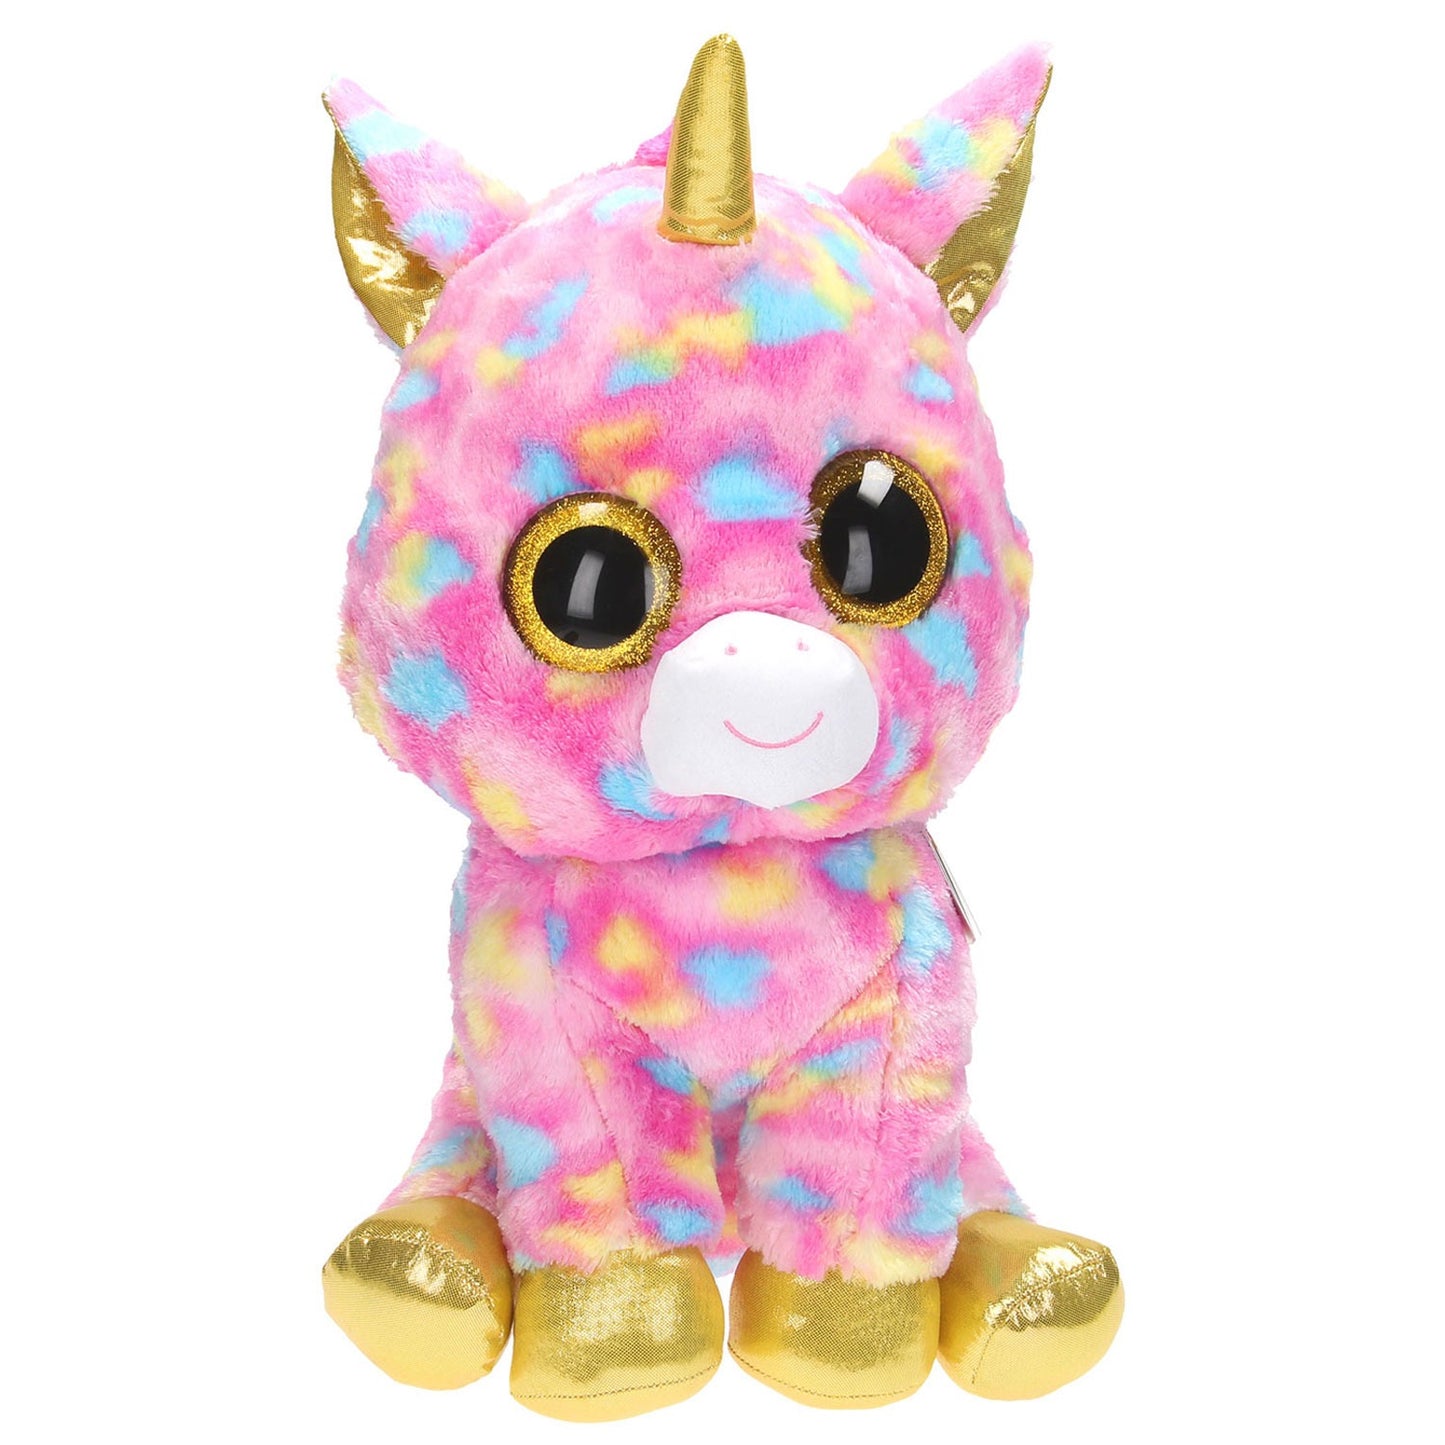 Fantasia - Unicorn - XL TY Beanie Boo - 36819